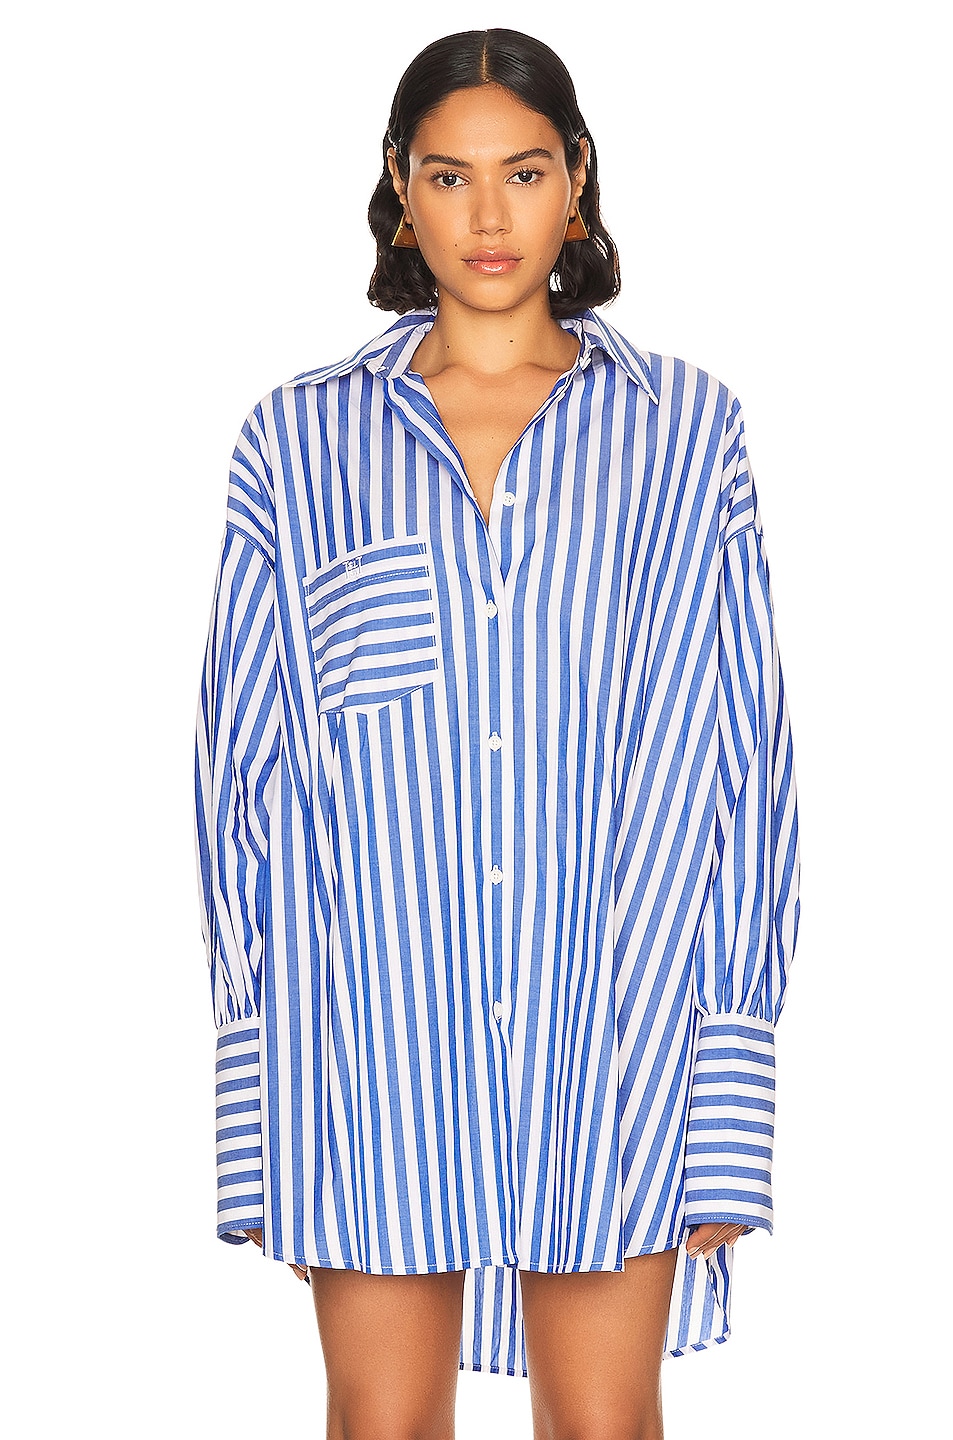 Helsa Sustainable Poplin Oversized Shirt in Bright Blue Stripe | FWRD